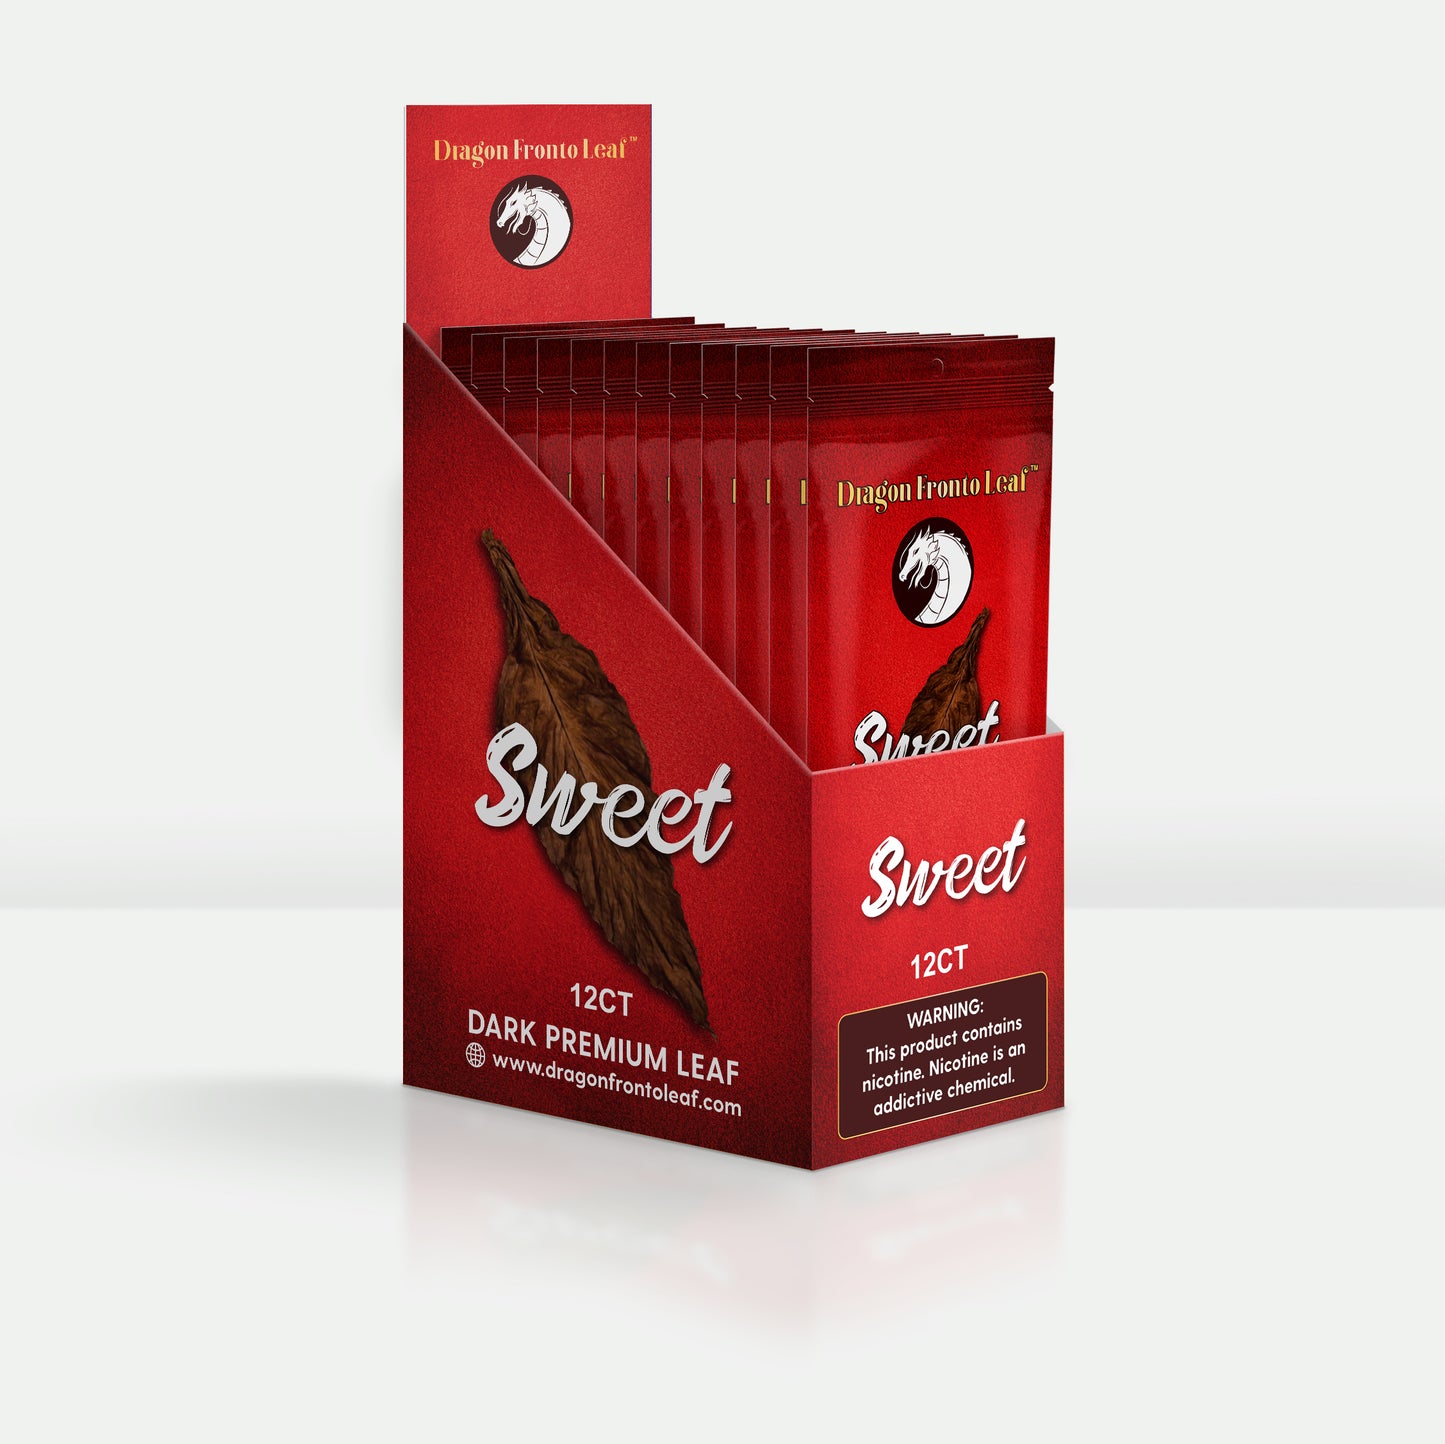 Sweet Dragon Fronto Leaf Dark Premium Tobacco Leaf Opened Box